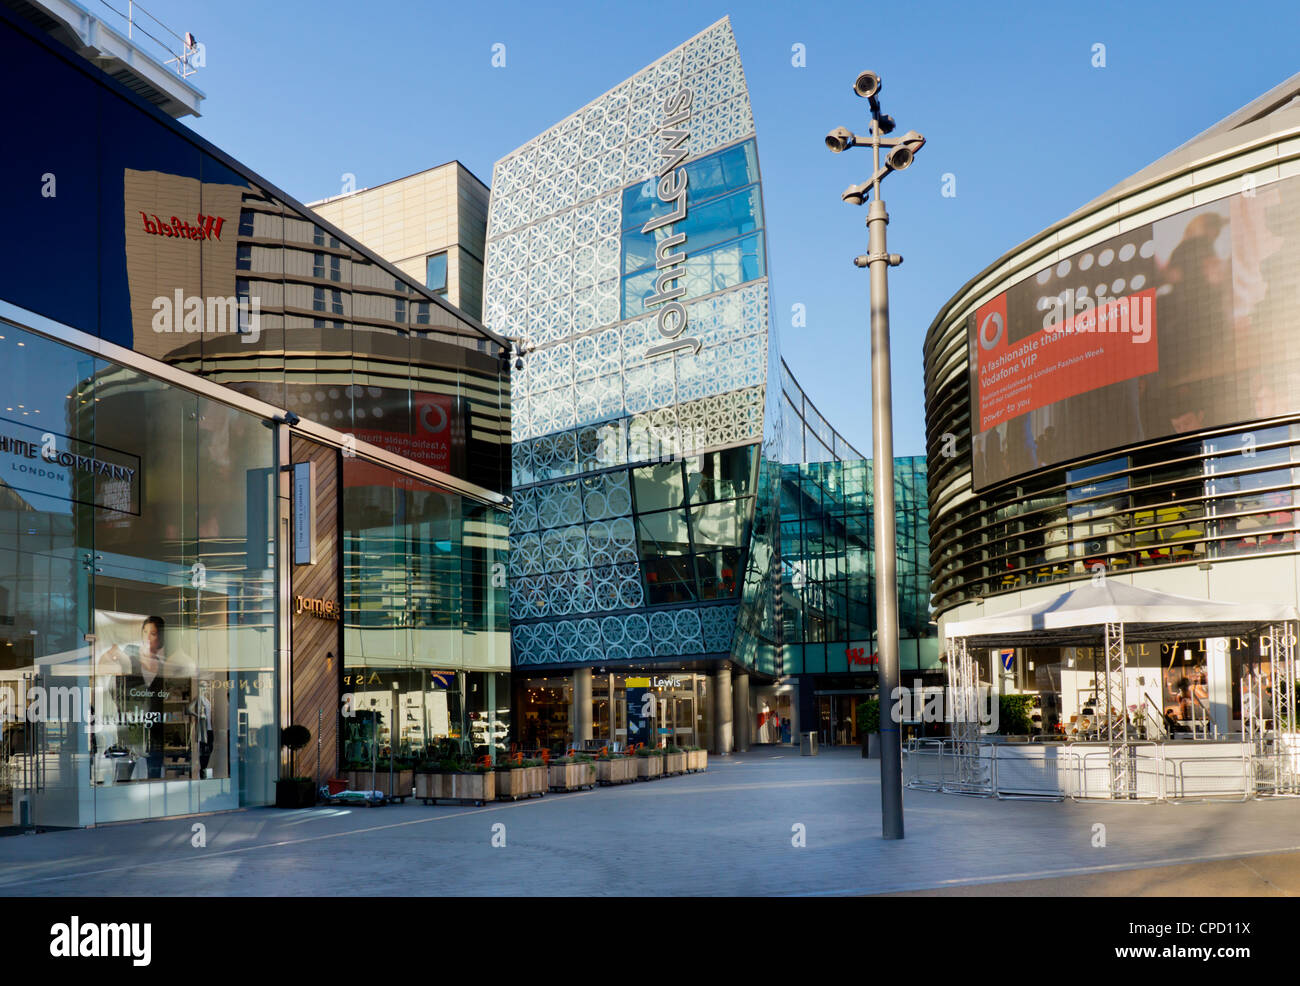 Le centre commercial de Westfield, Stratford, London, Angleterre, Royaume-Uni, Europe Banque D'Images